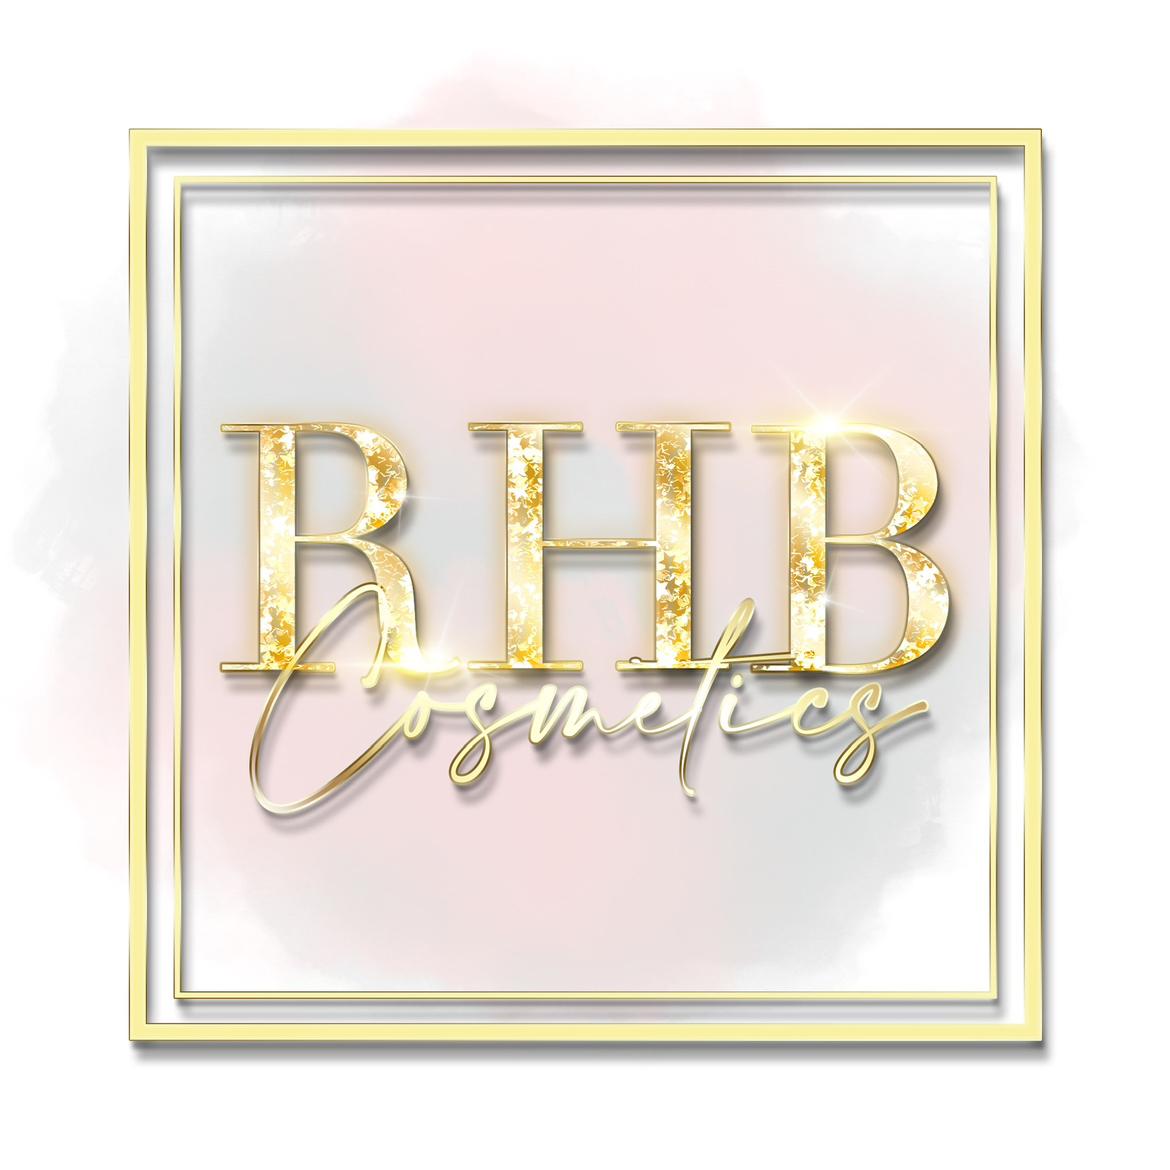 RHB Cosmetics's images